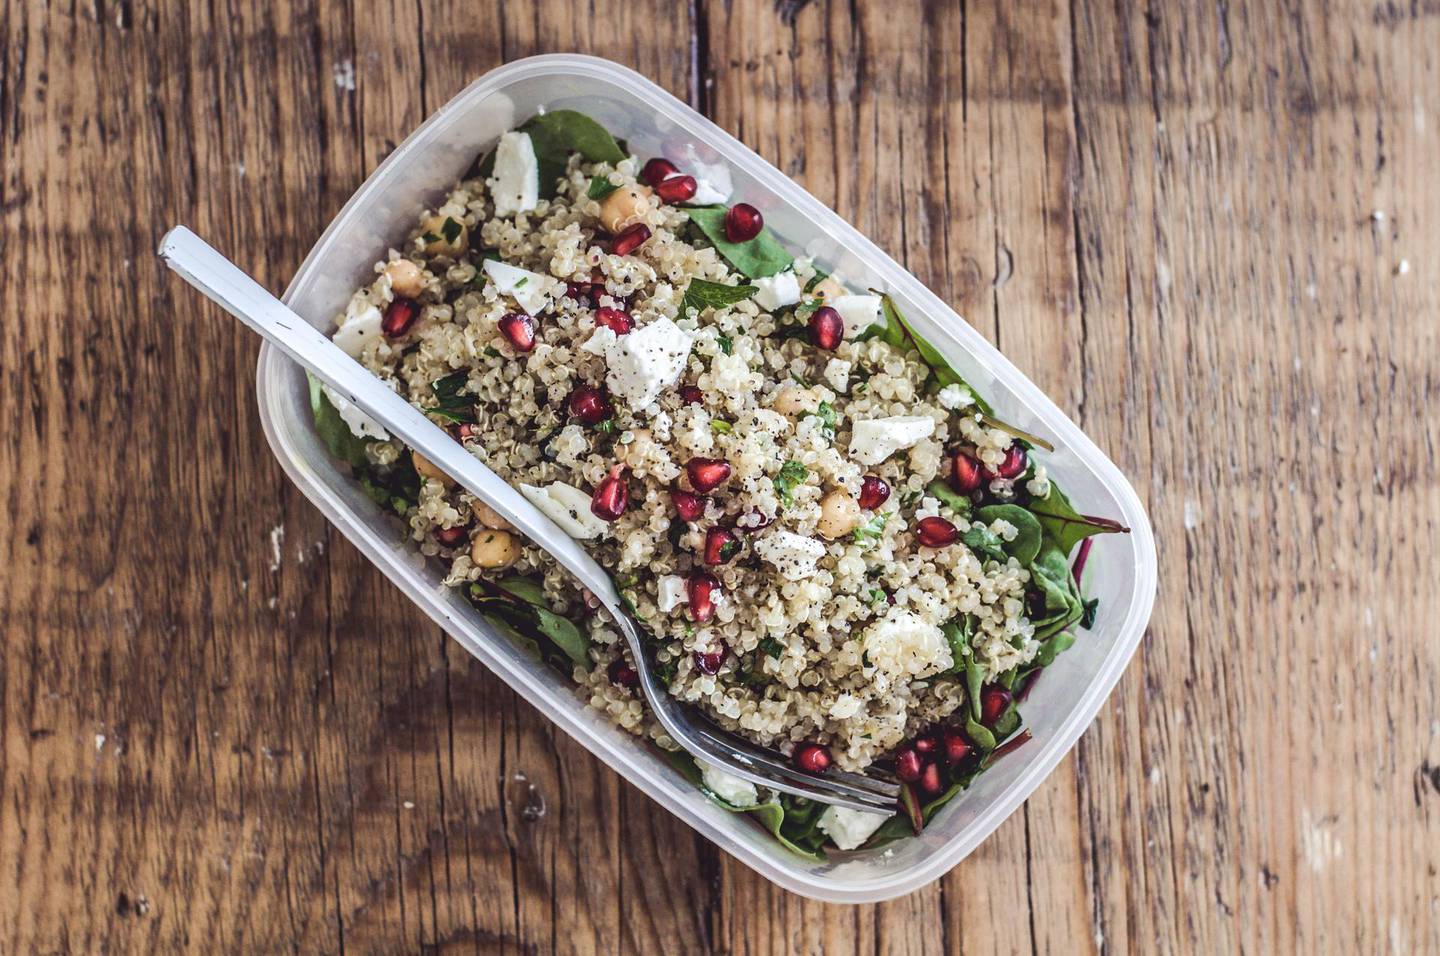 A quinoa, feta and pomegranate salad beats a lettuce-based option. Courtesy Scott Price